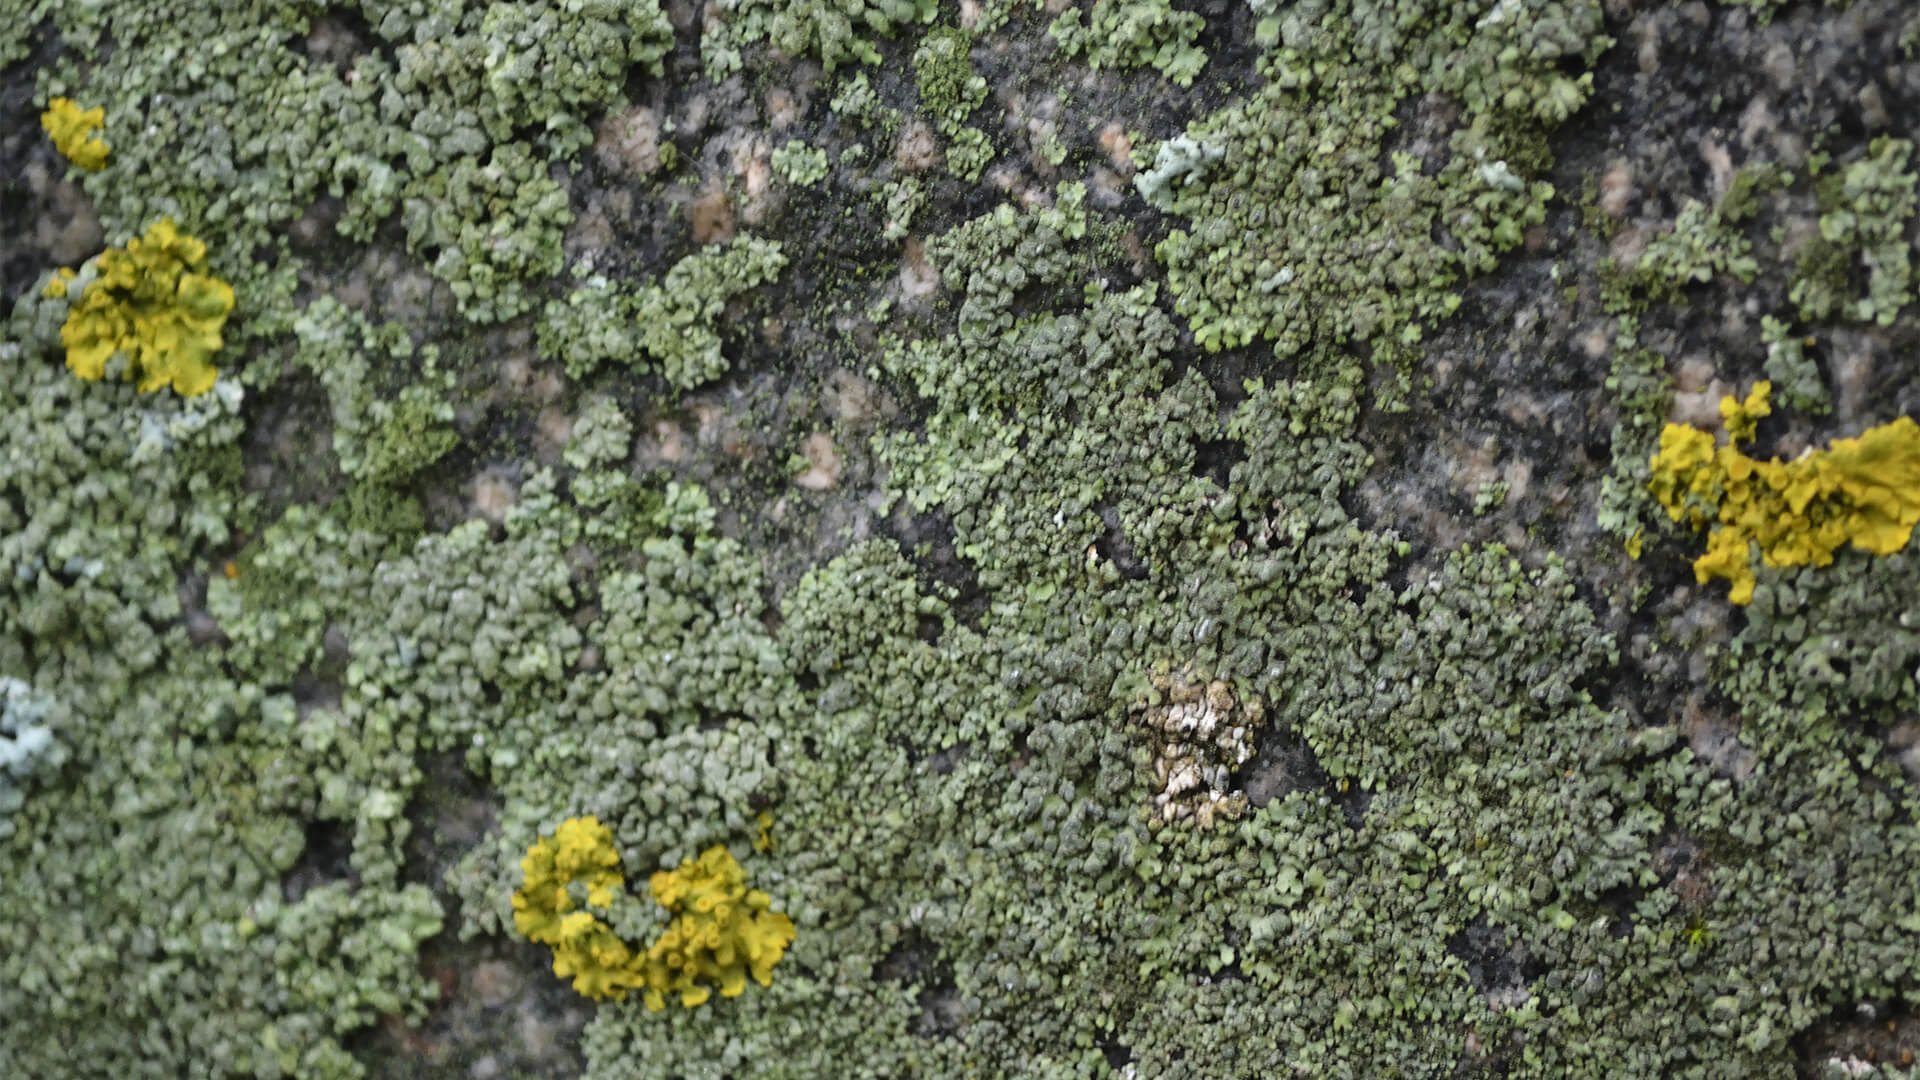 Closeup of black spot algae on stone